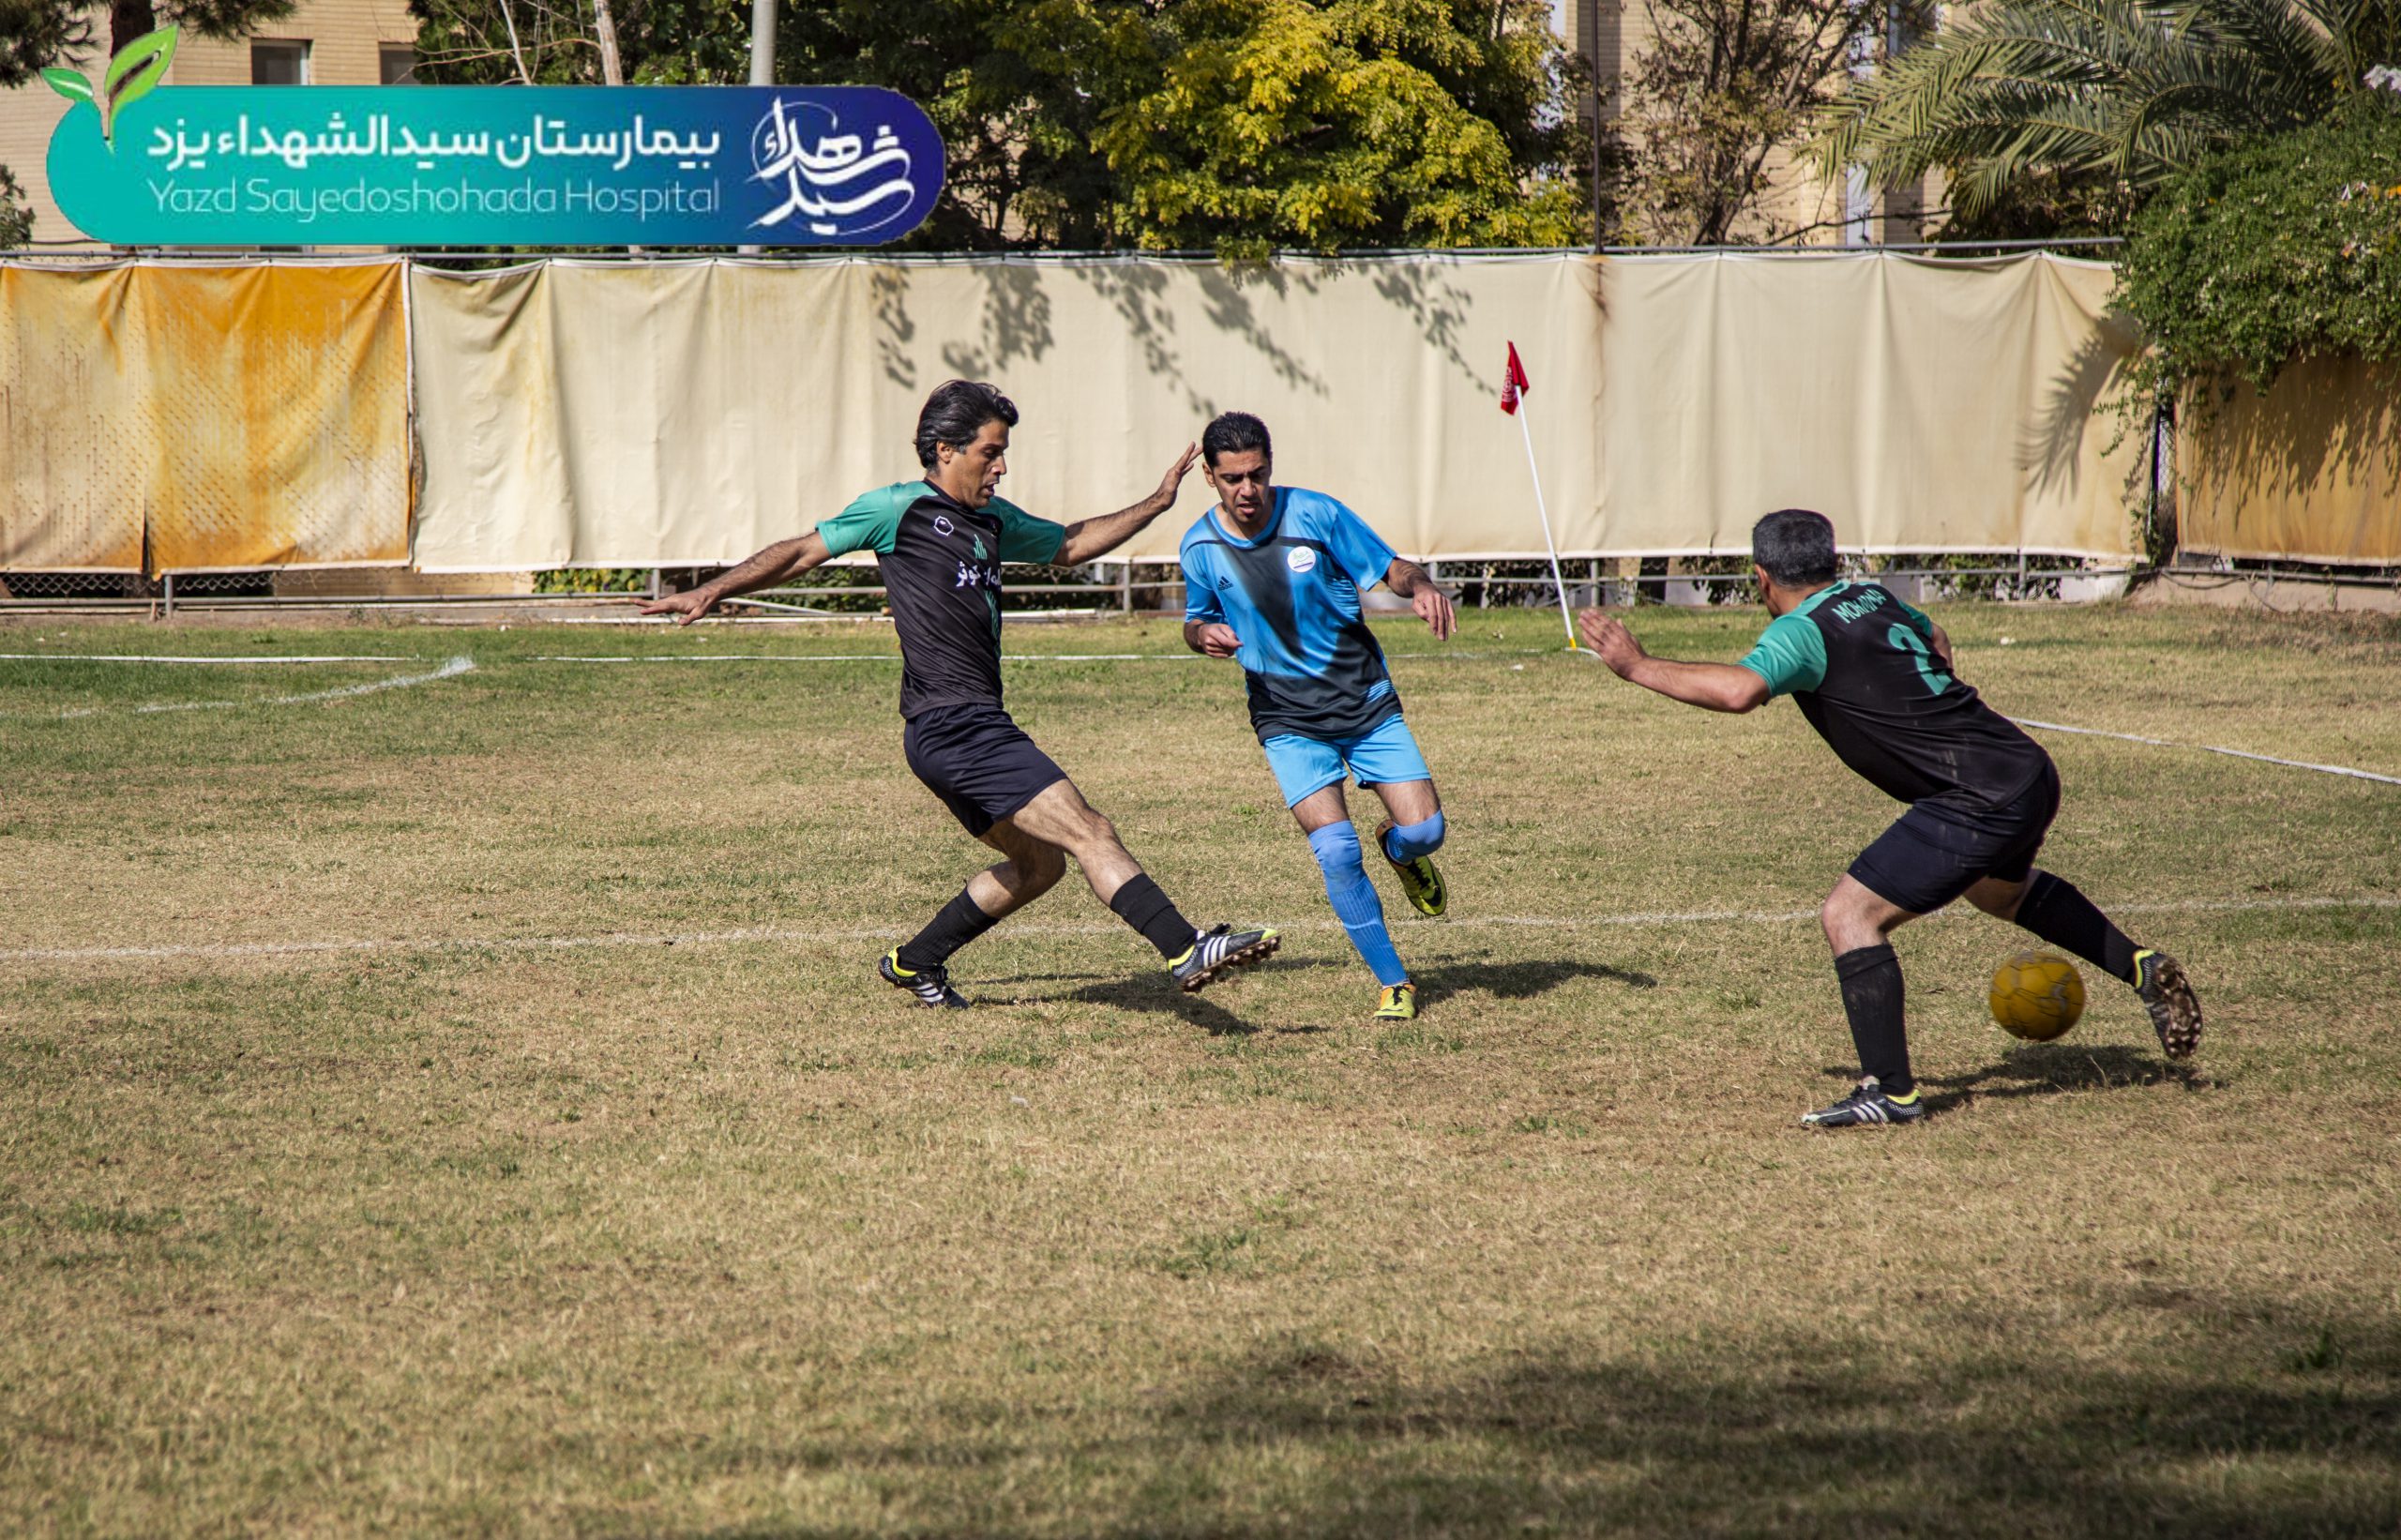 عکس: پیروزی پرگل تیم فوتبال بیمارستان سیدالشهداء یزد | بیمارستان سیدالشهداء یزد